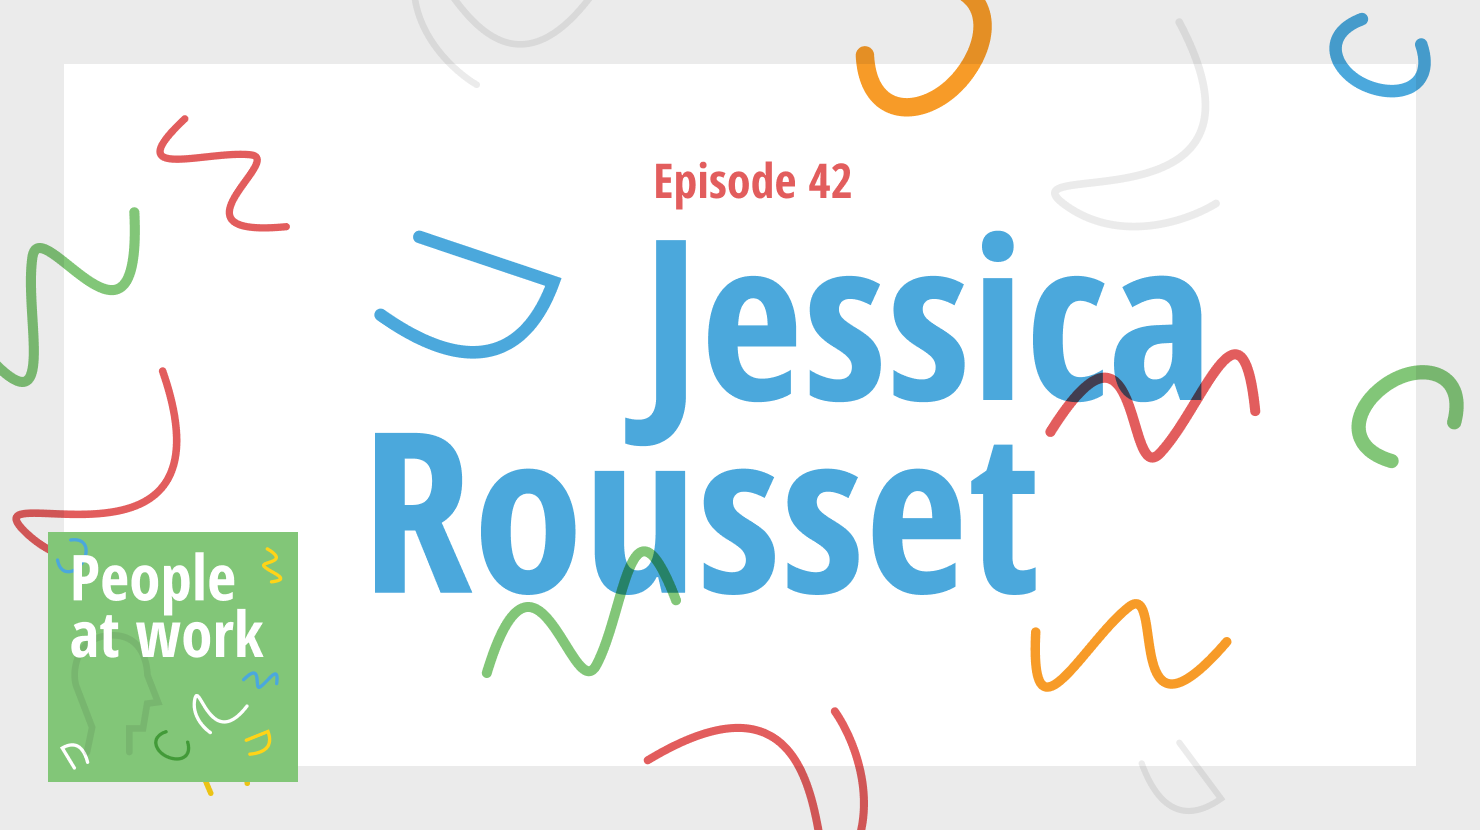 Trust is culture, says Jessica Rousset